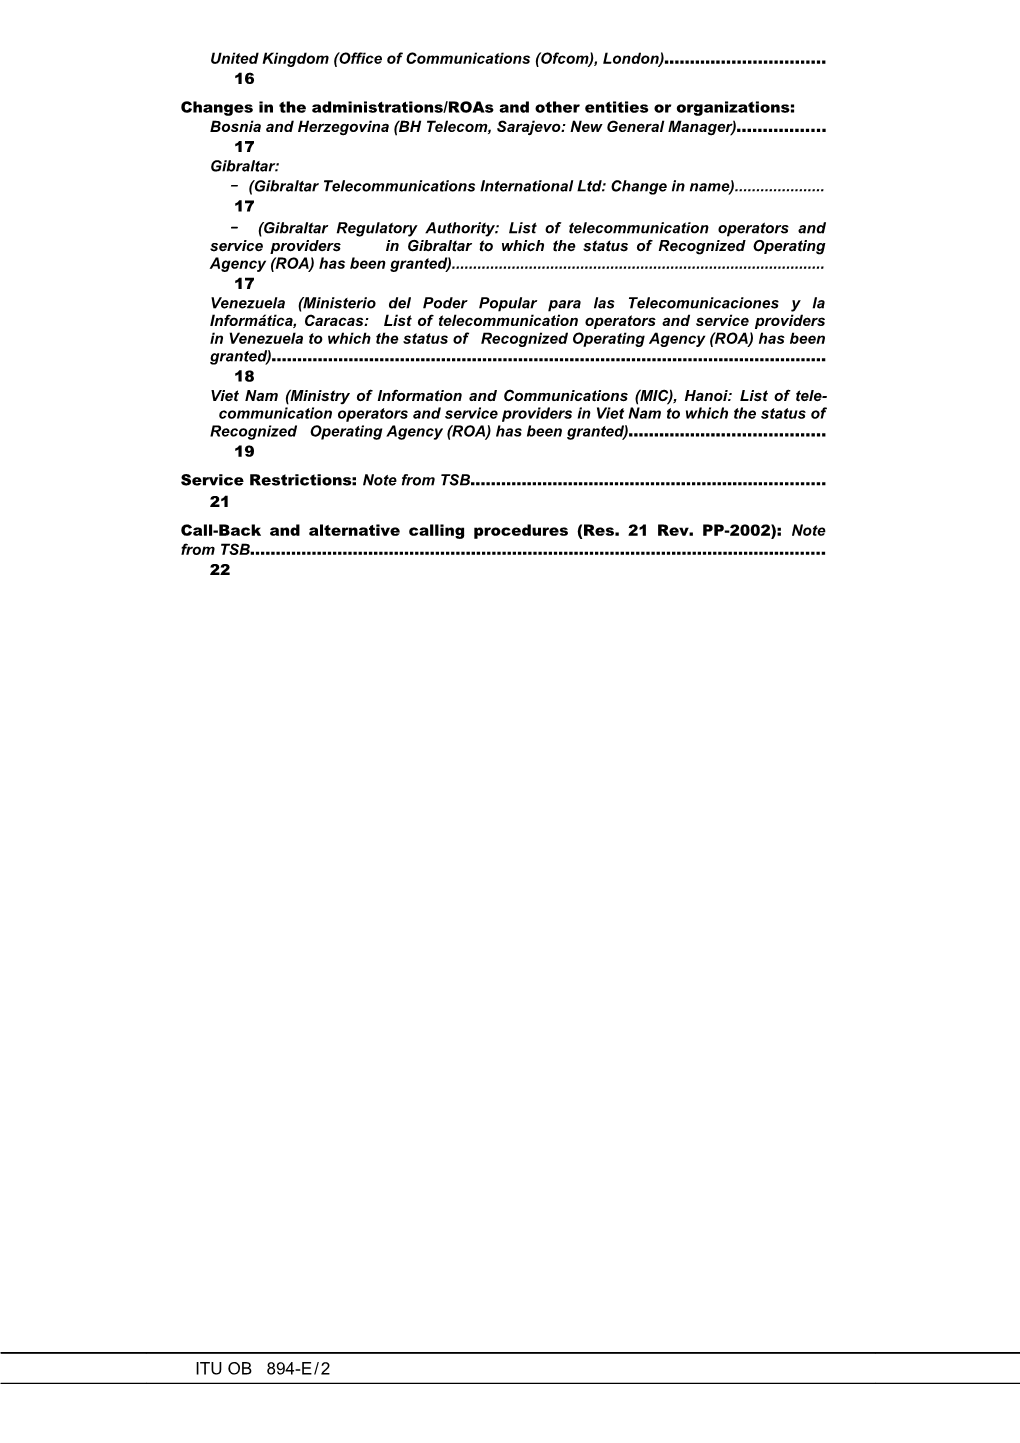 ITU Operational Bulletin No.894 Du 15.X.2007